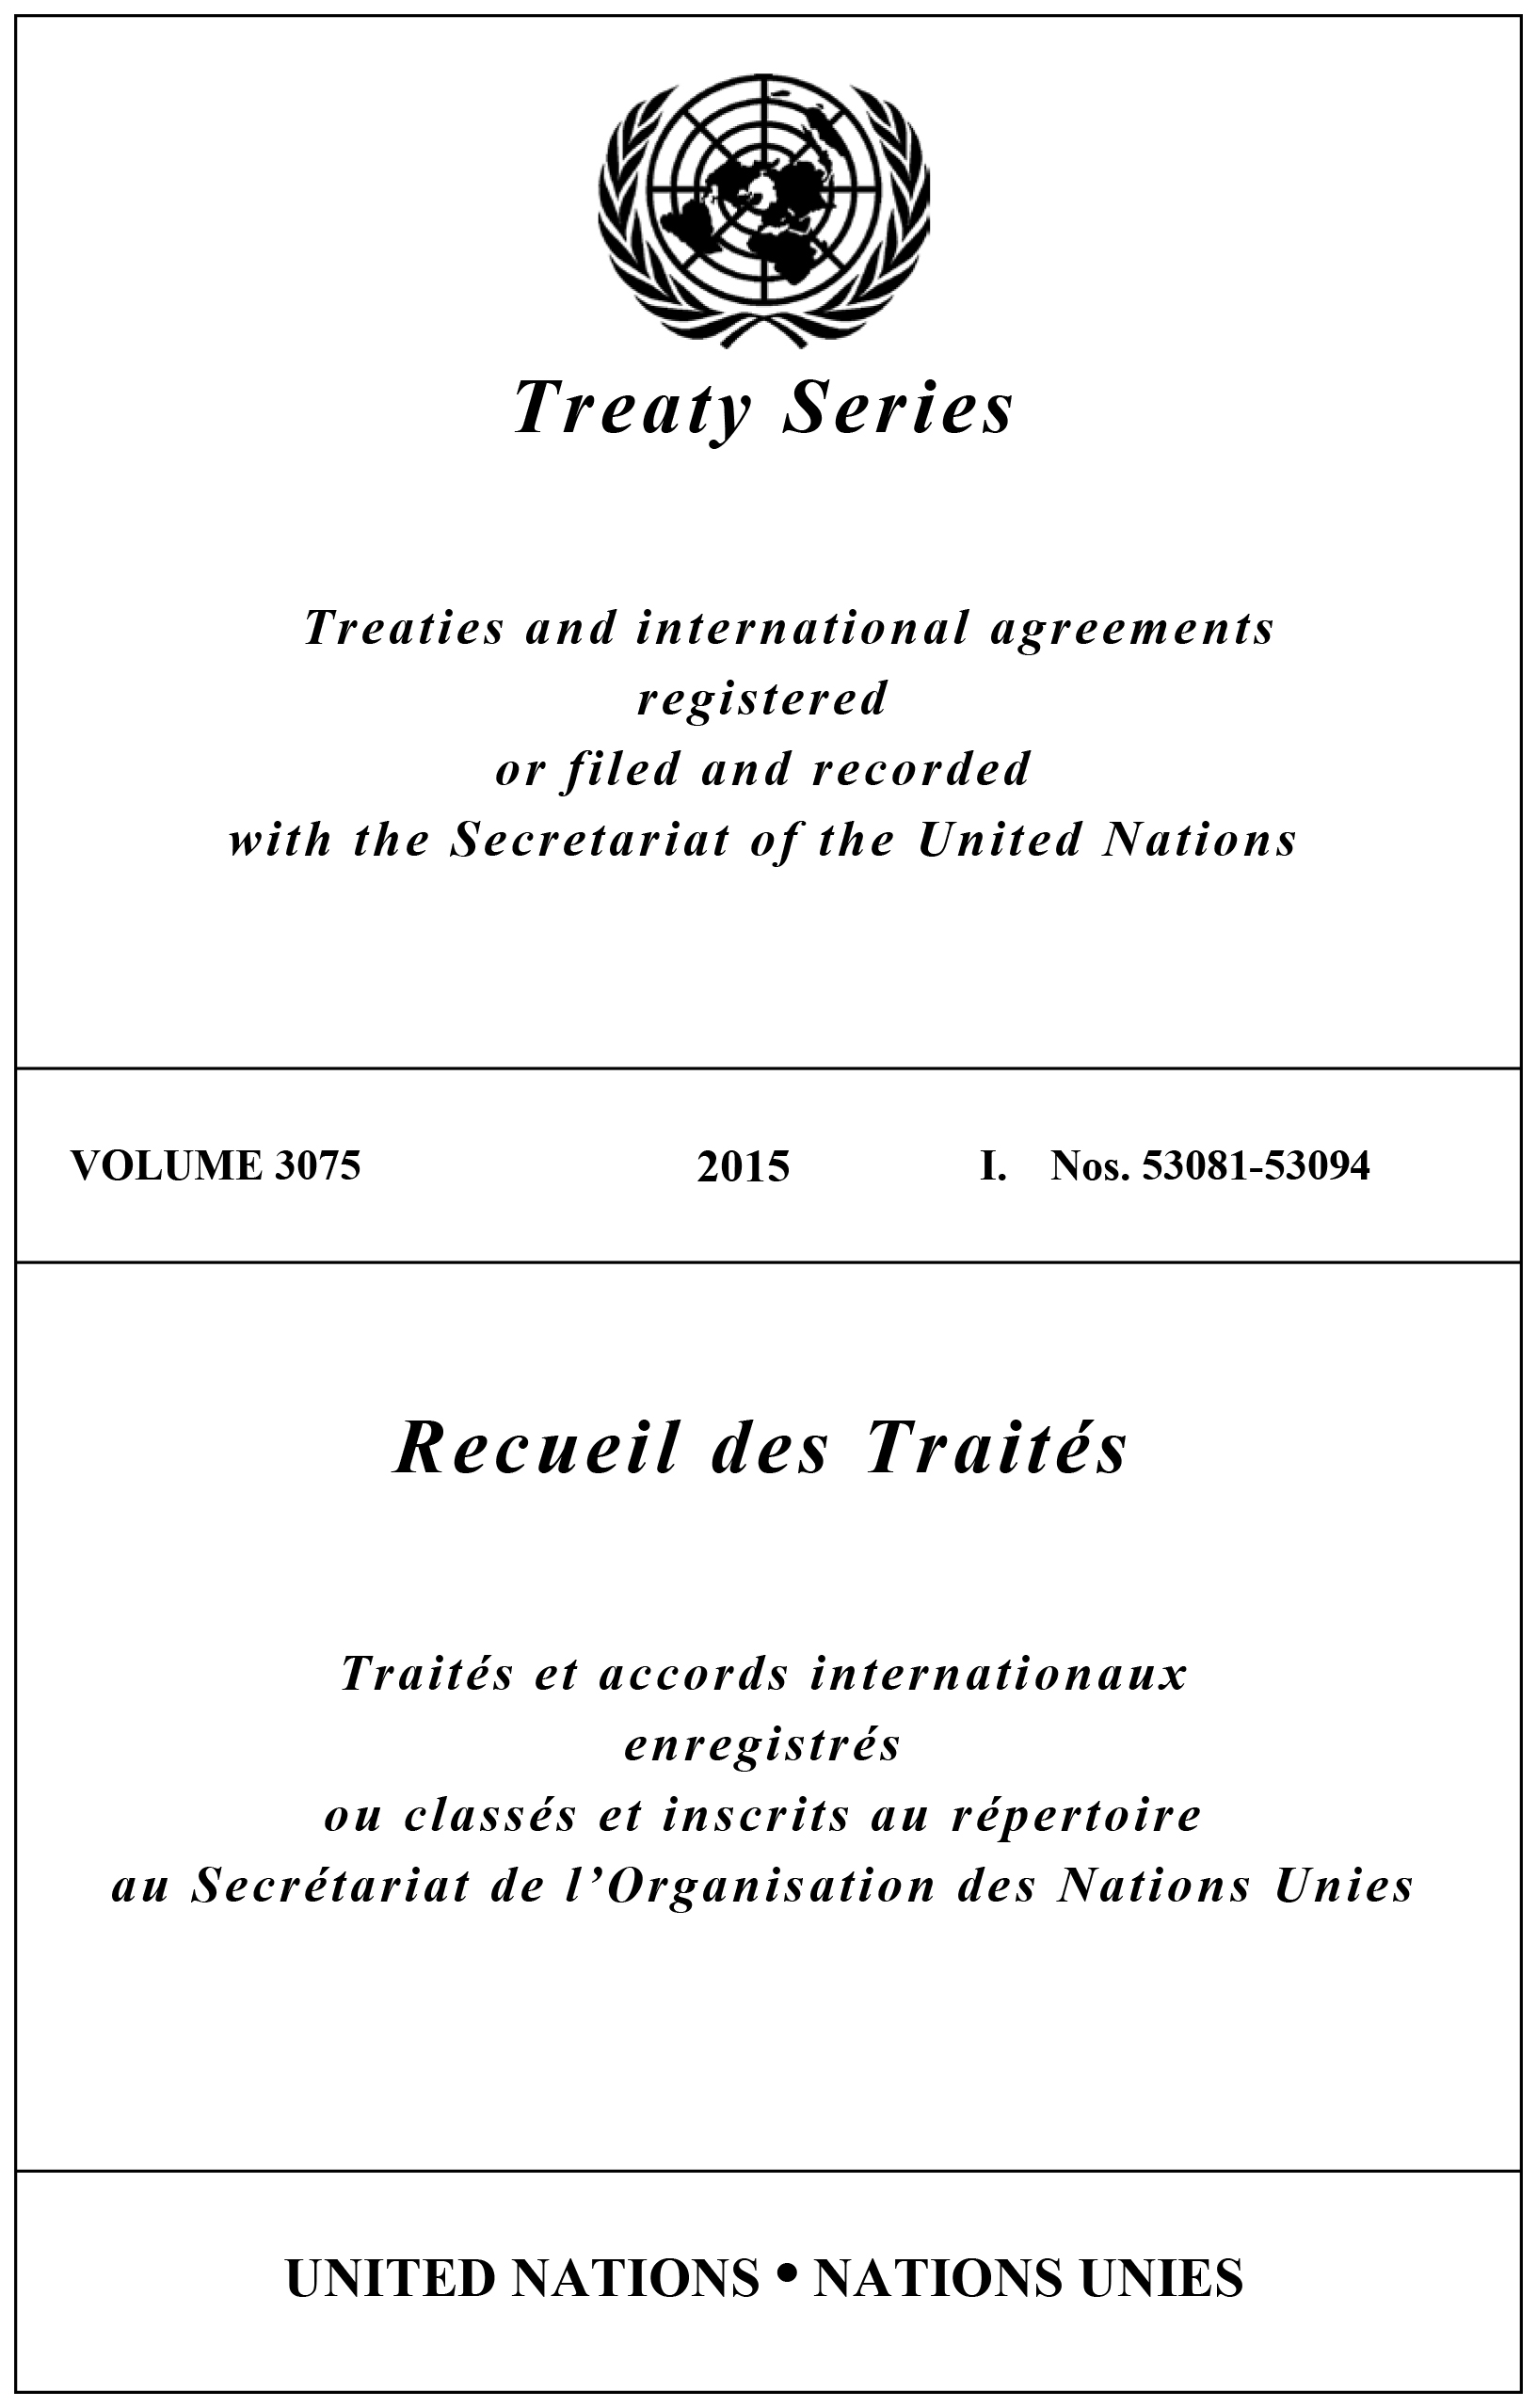 image of Treaty Series 3075